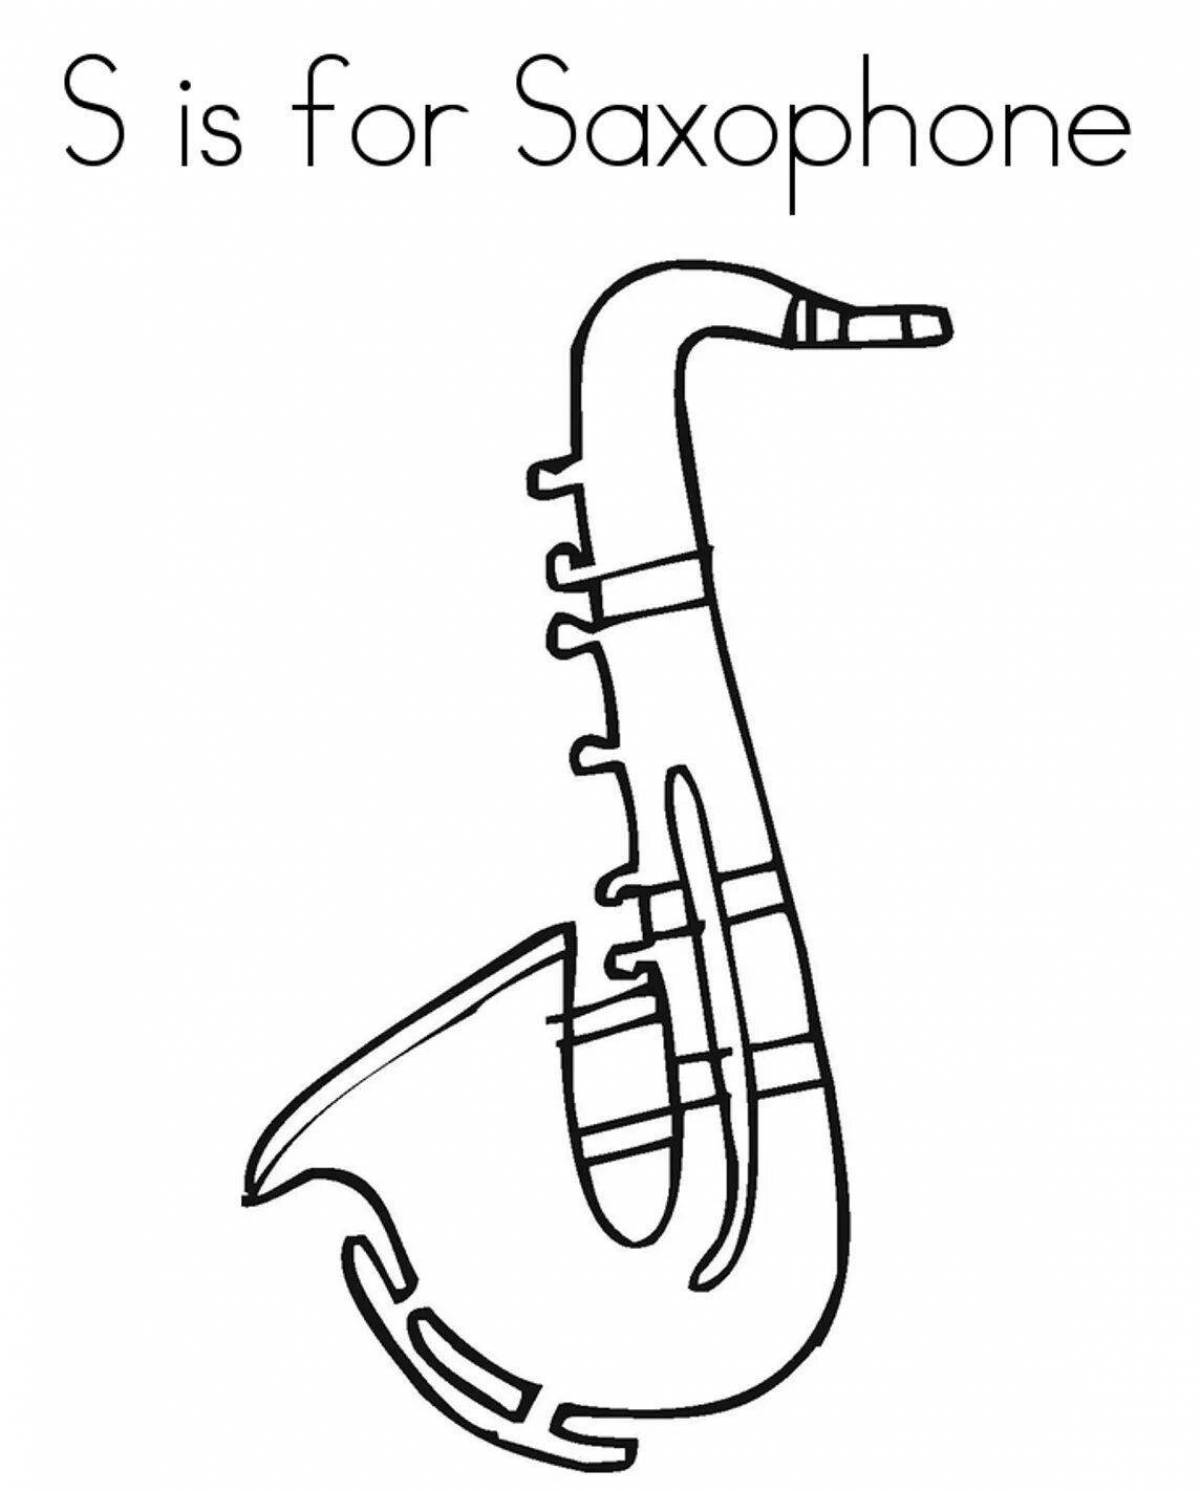 Shining Saxophone coloring page